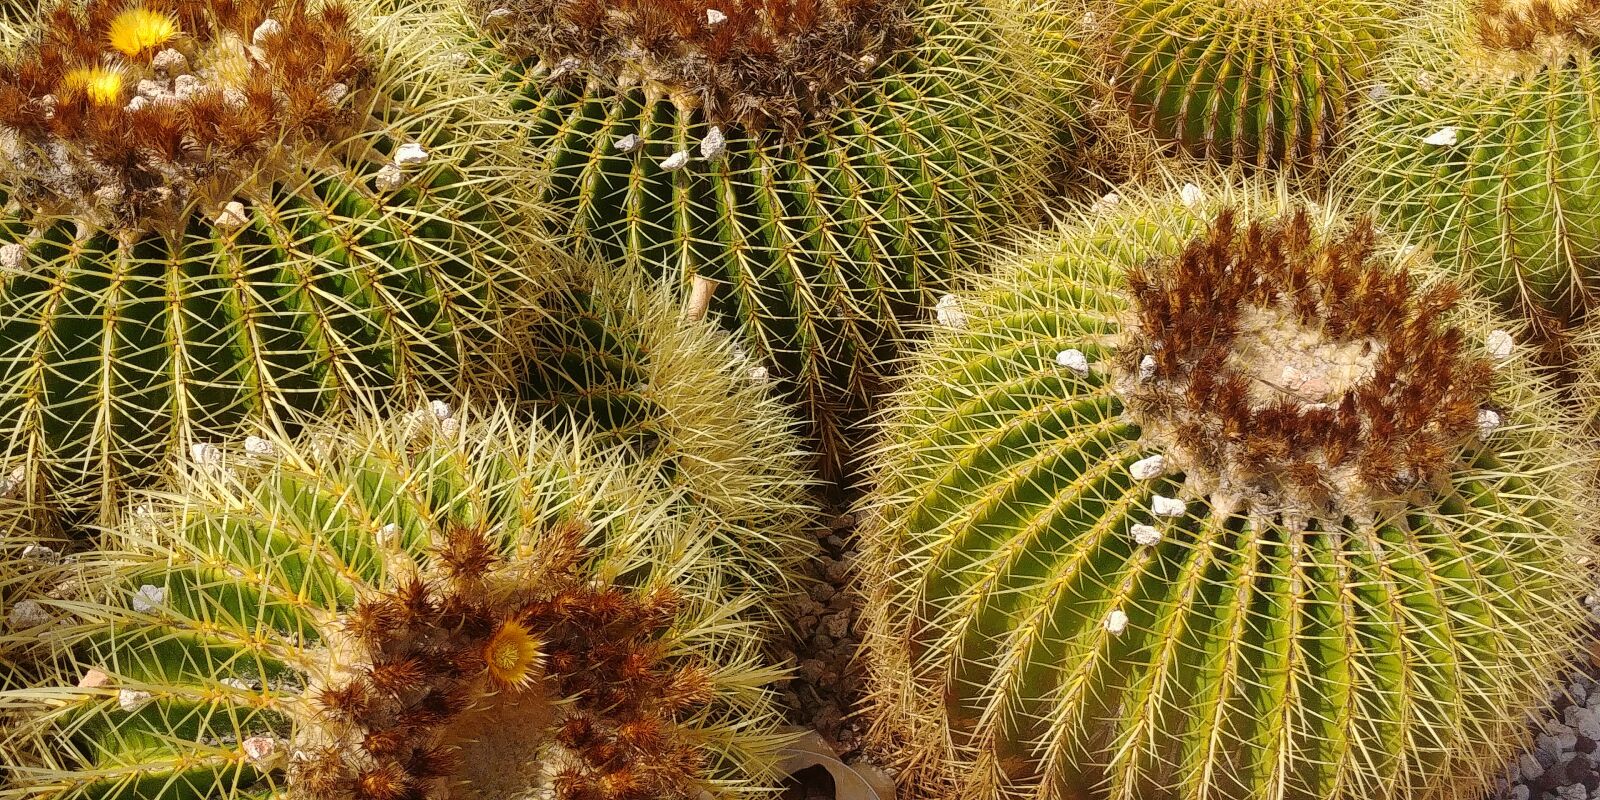 LG G6 sample photo. Cactus, plant, nature photography